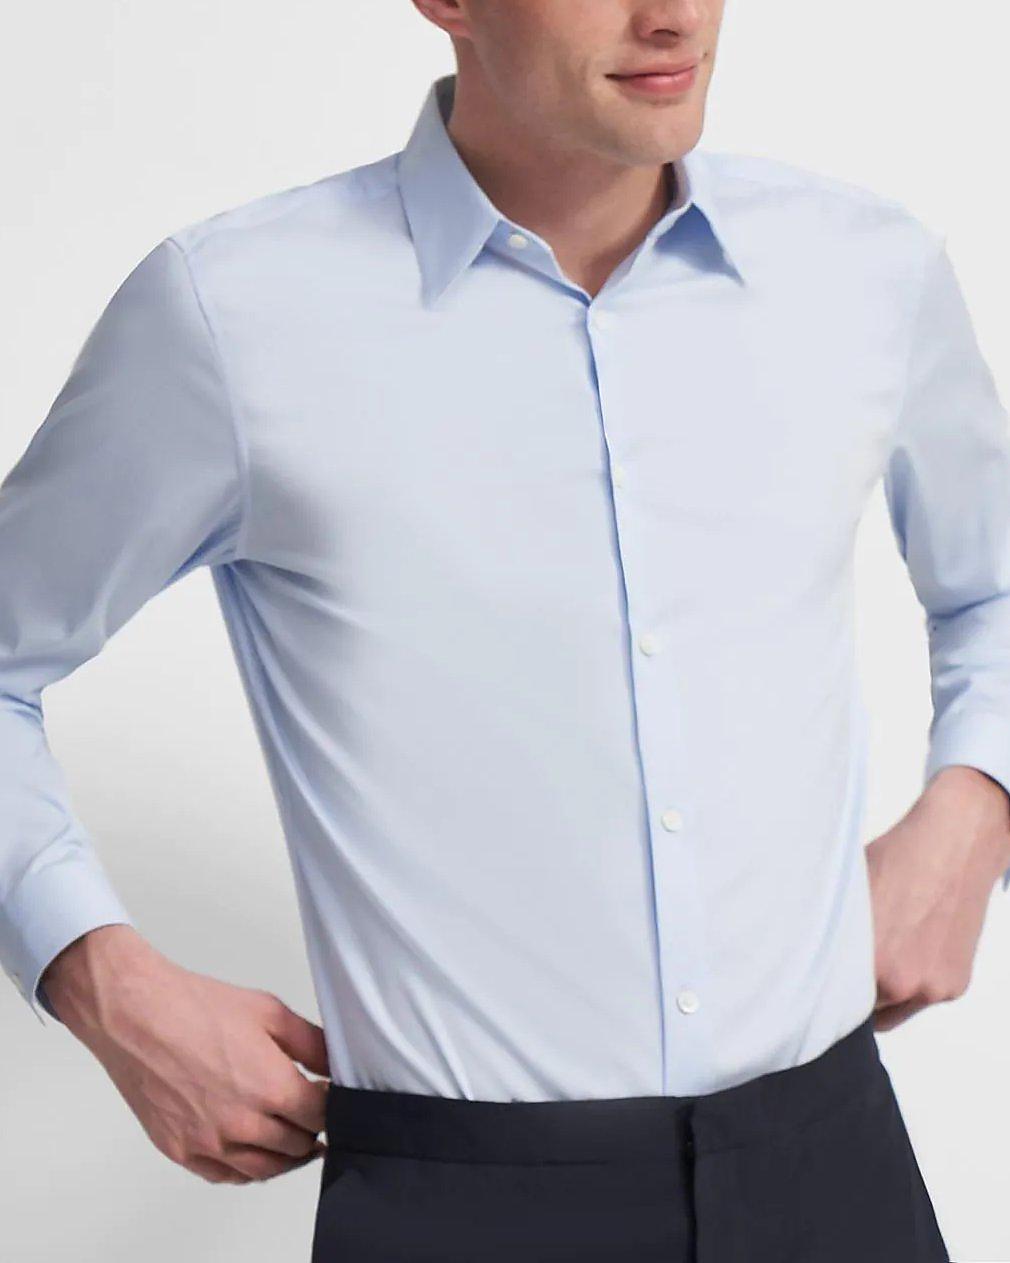 The Sylvain Shirt in Good Cotton Model